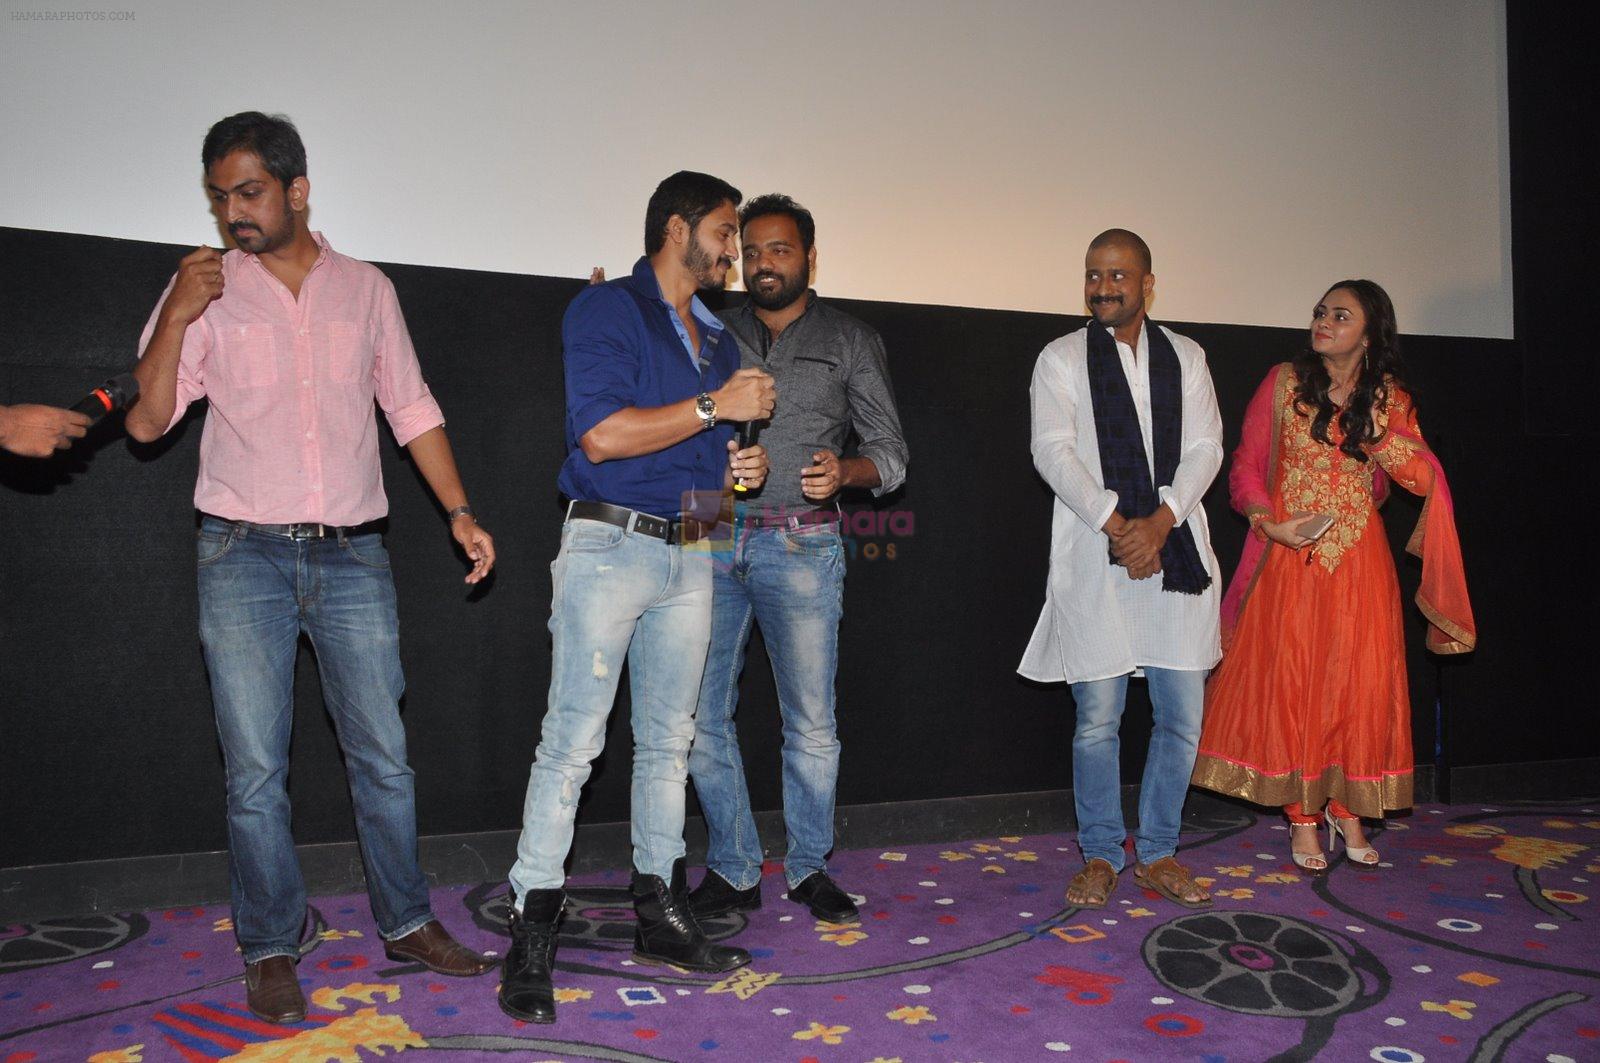 Jitendra Joshi, Amruta Khanvilkar, Shreyas Talpade at the First Look & Theatrical Trailer launch of Shreyas Talpade starrer Baji in mumbai on 9th Dec 2014